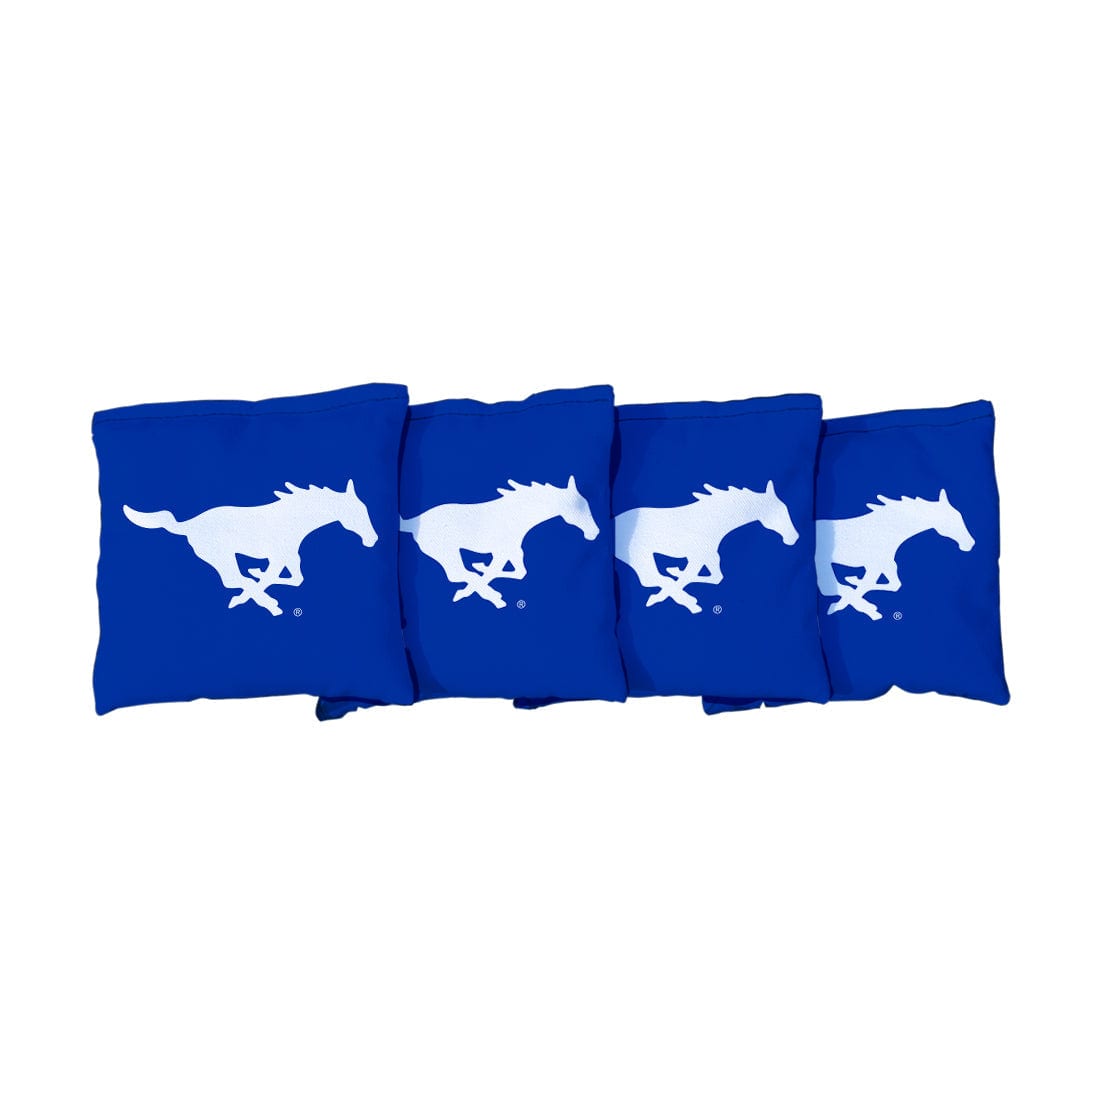 Southern Methodist University Mustangs Blue Cornhole Bags